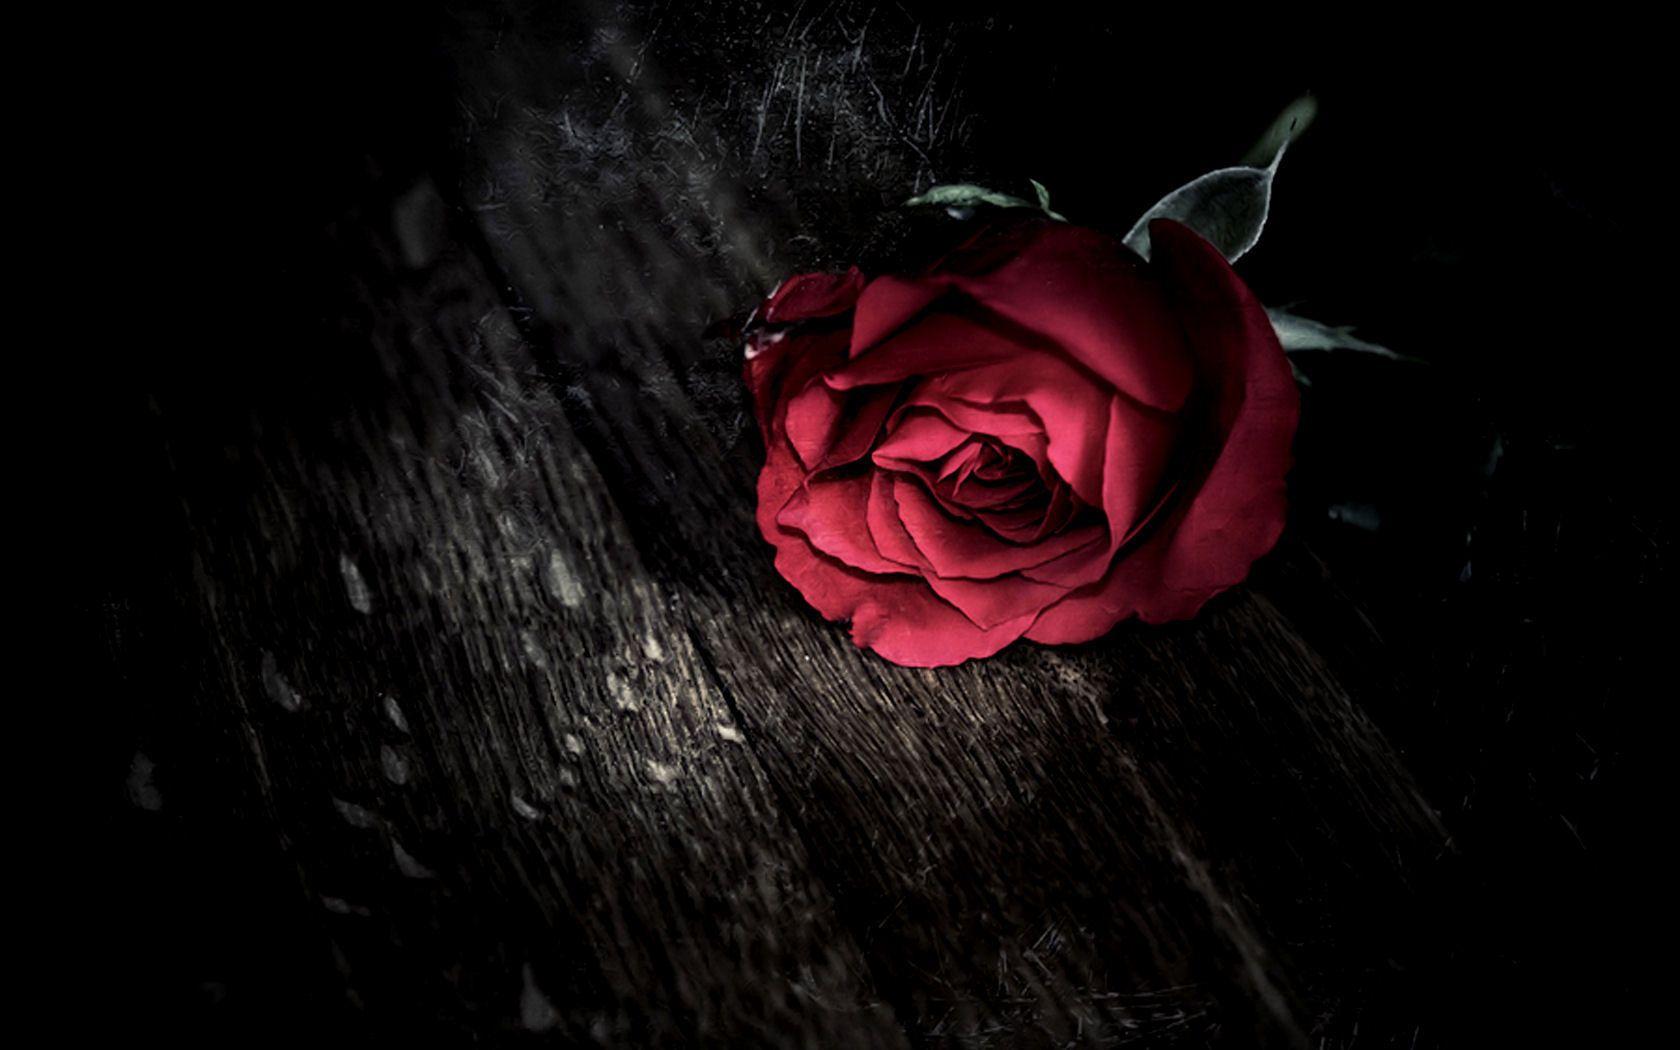 Red Flower Roses HD Wallpaper For You Desktop Rose With Black